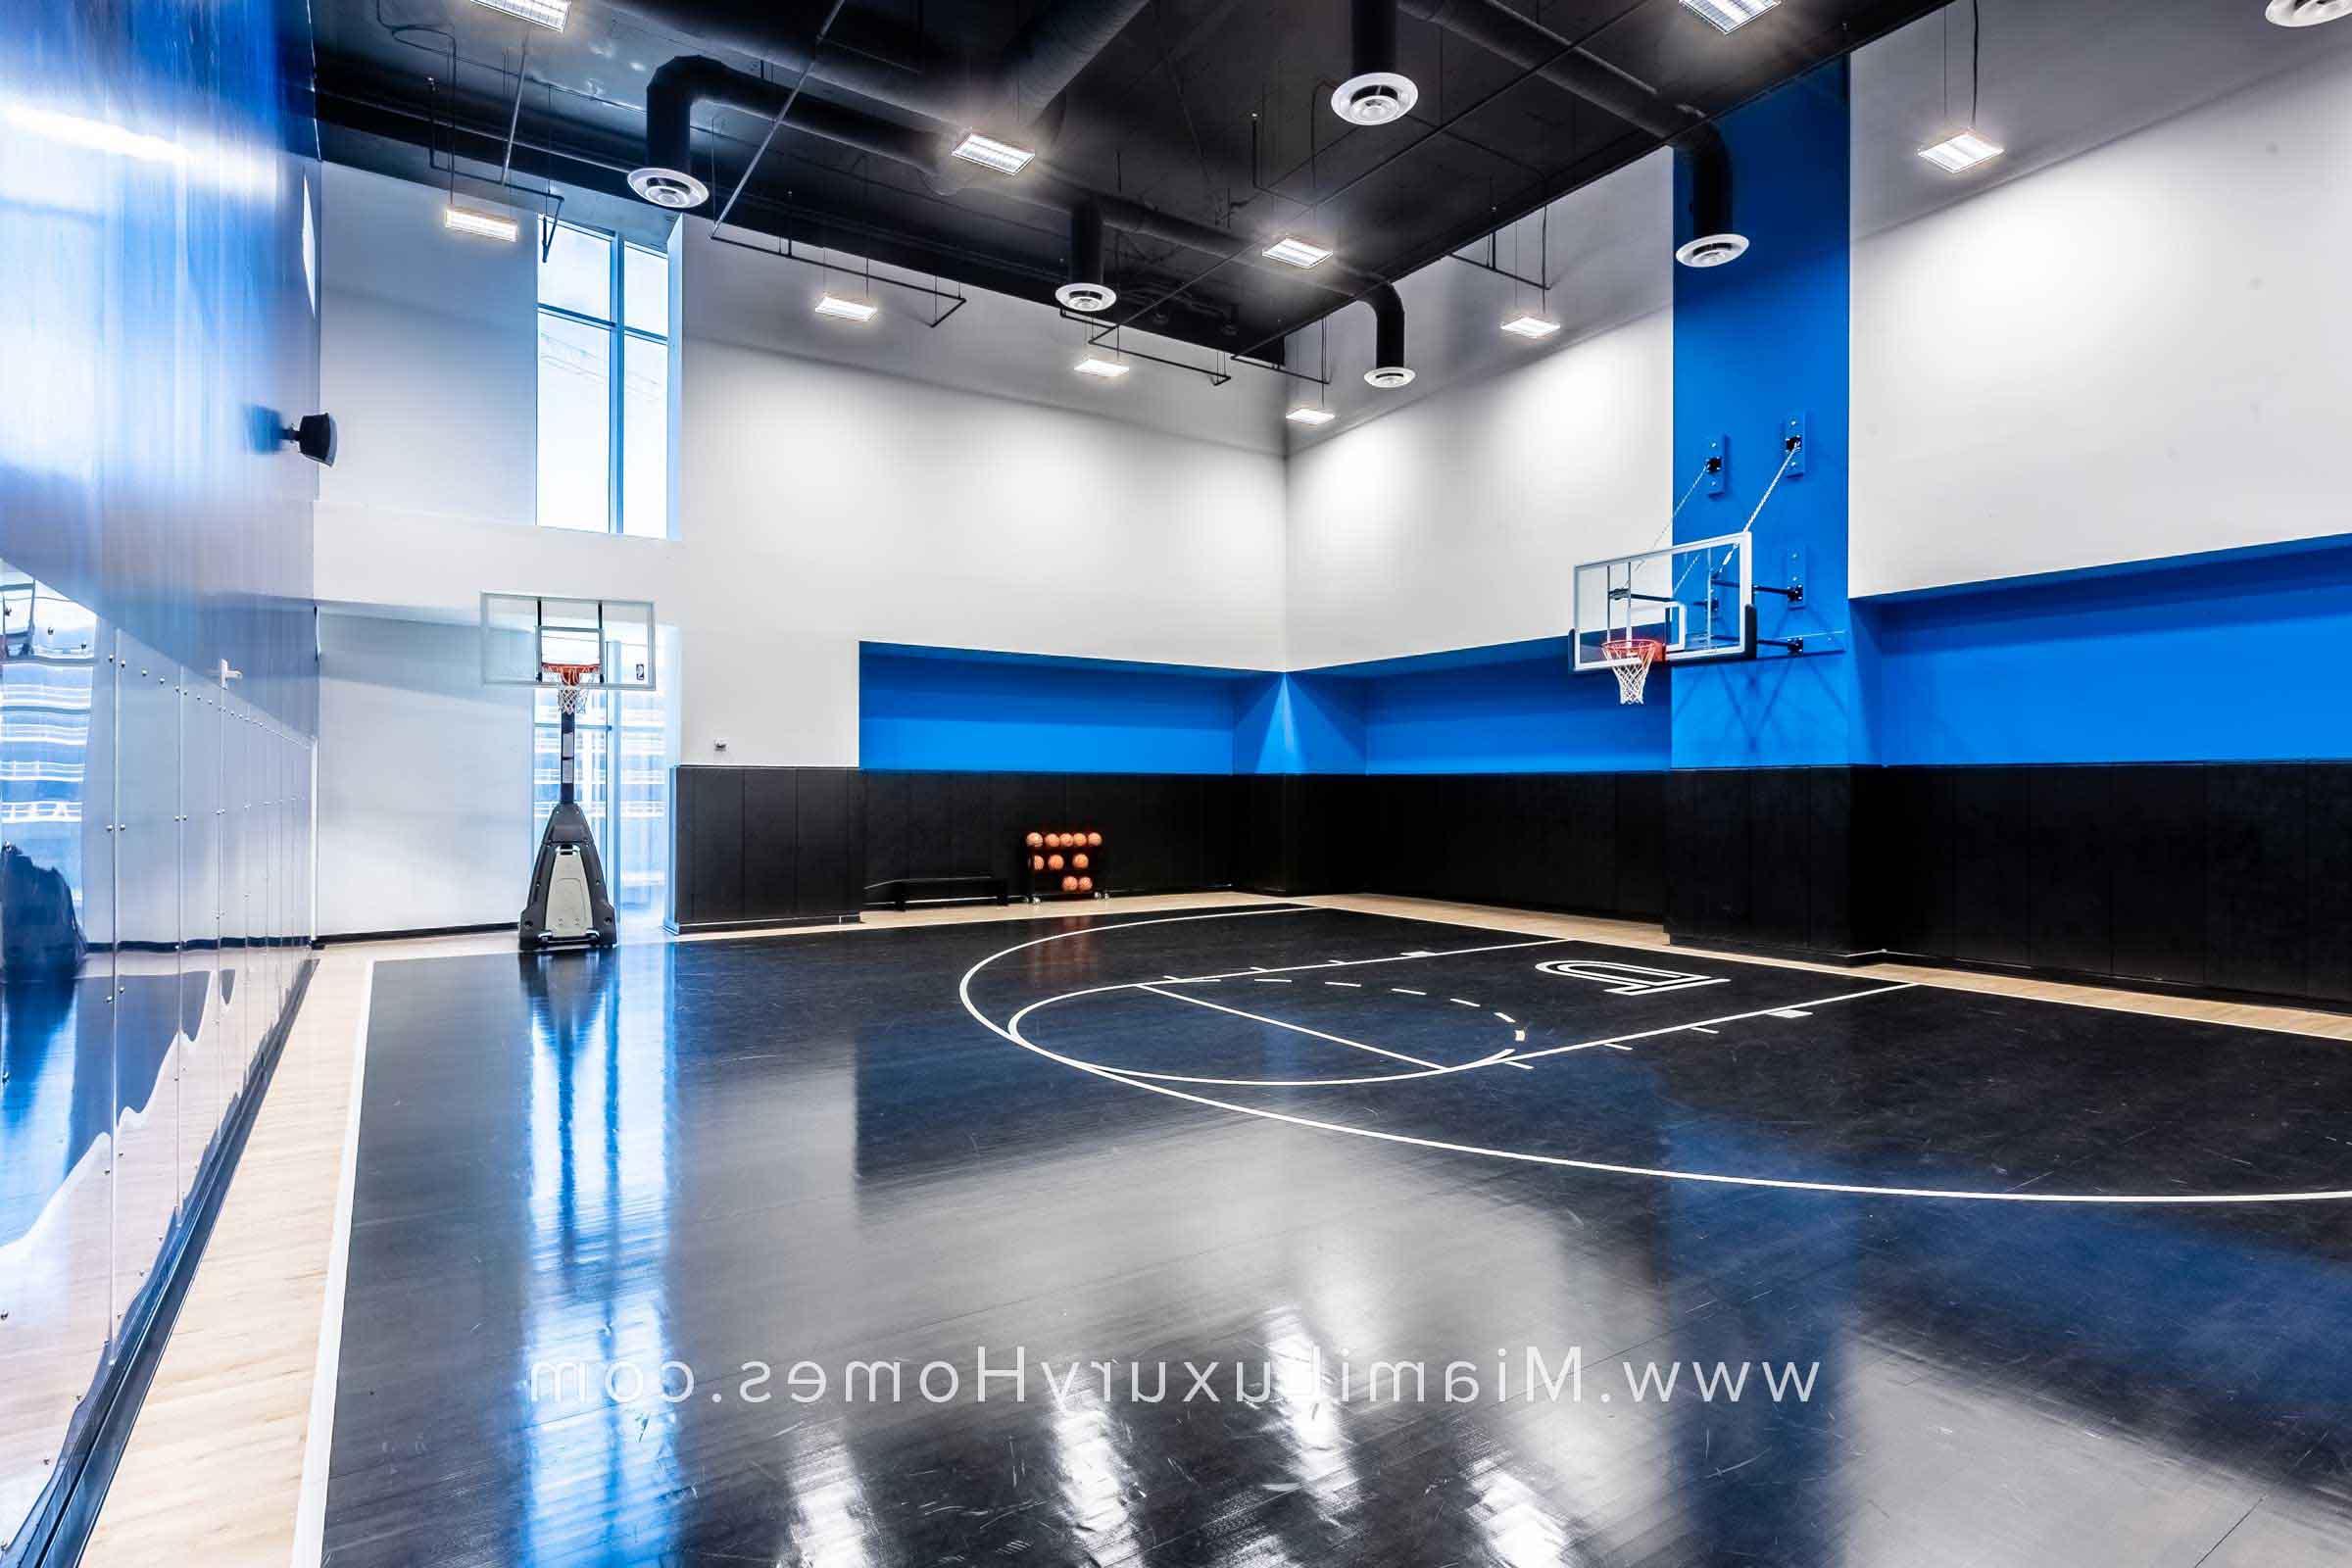 Paramount Miami Worldcenter Basketball Court